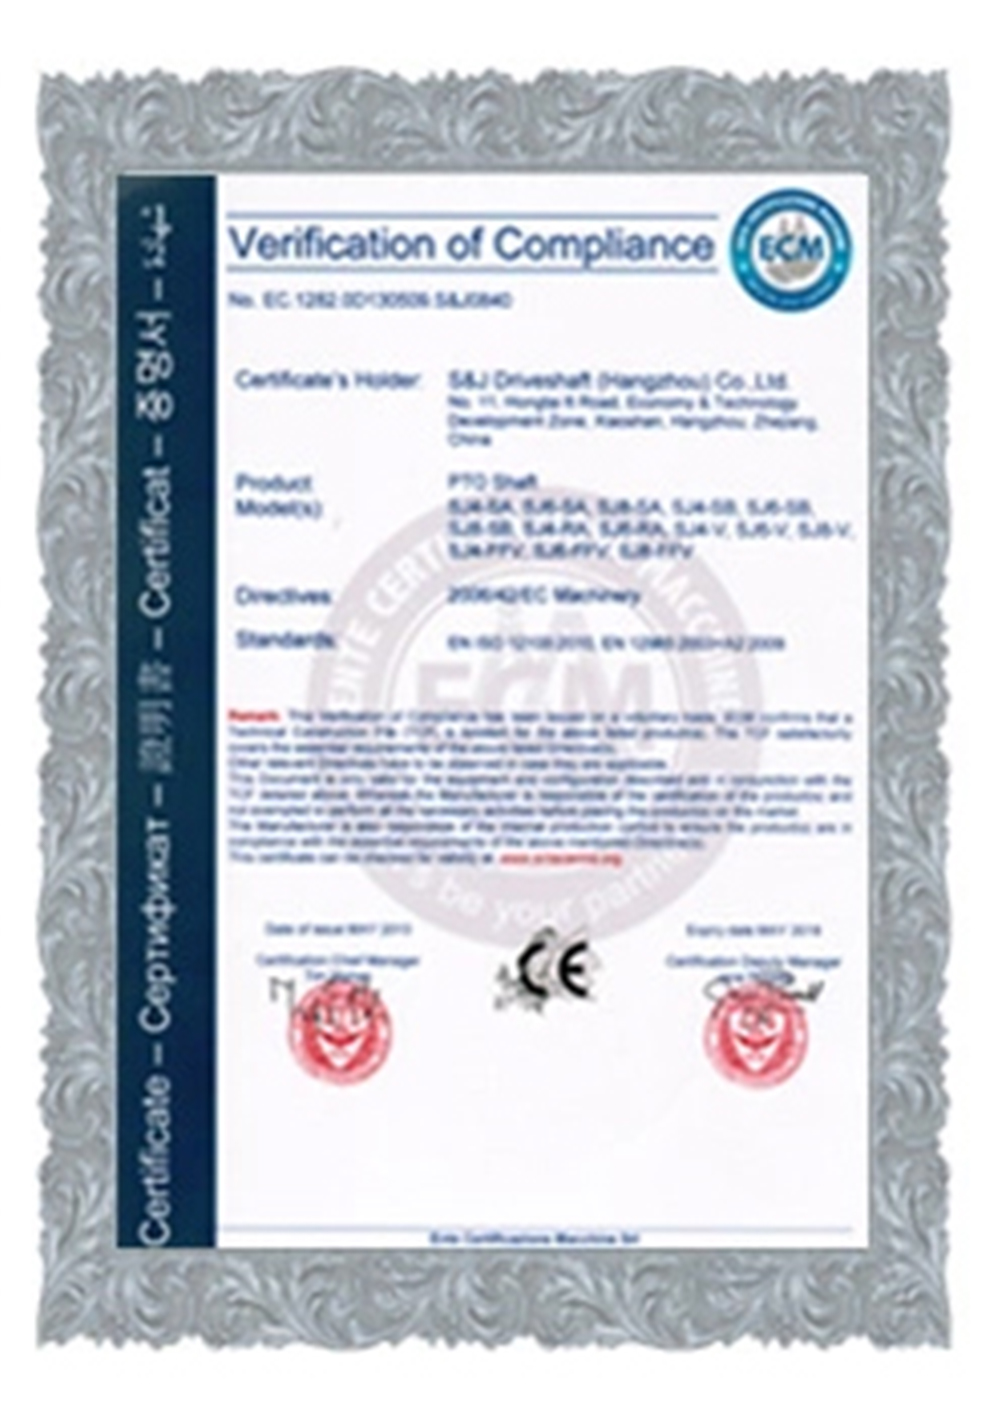 HV Motor CE Certificate